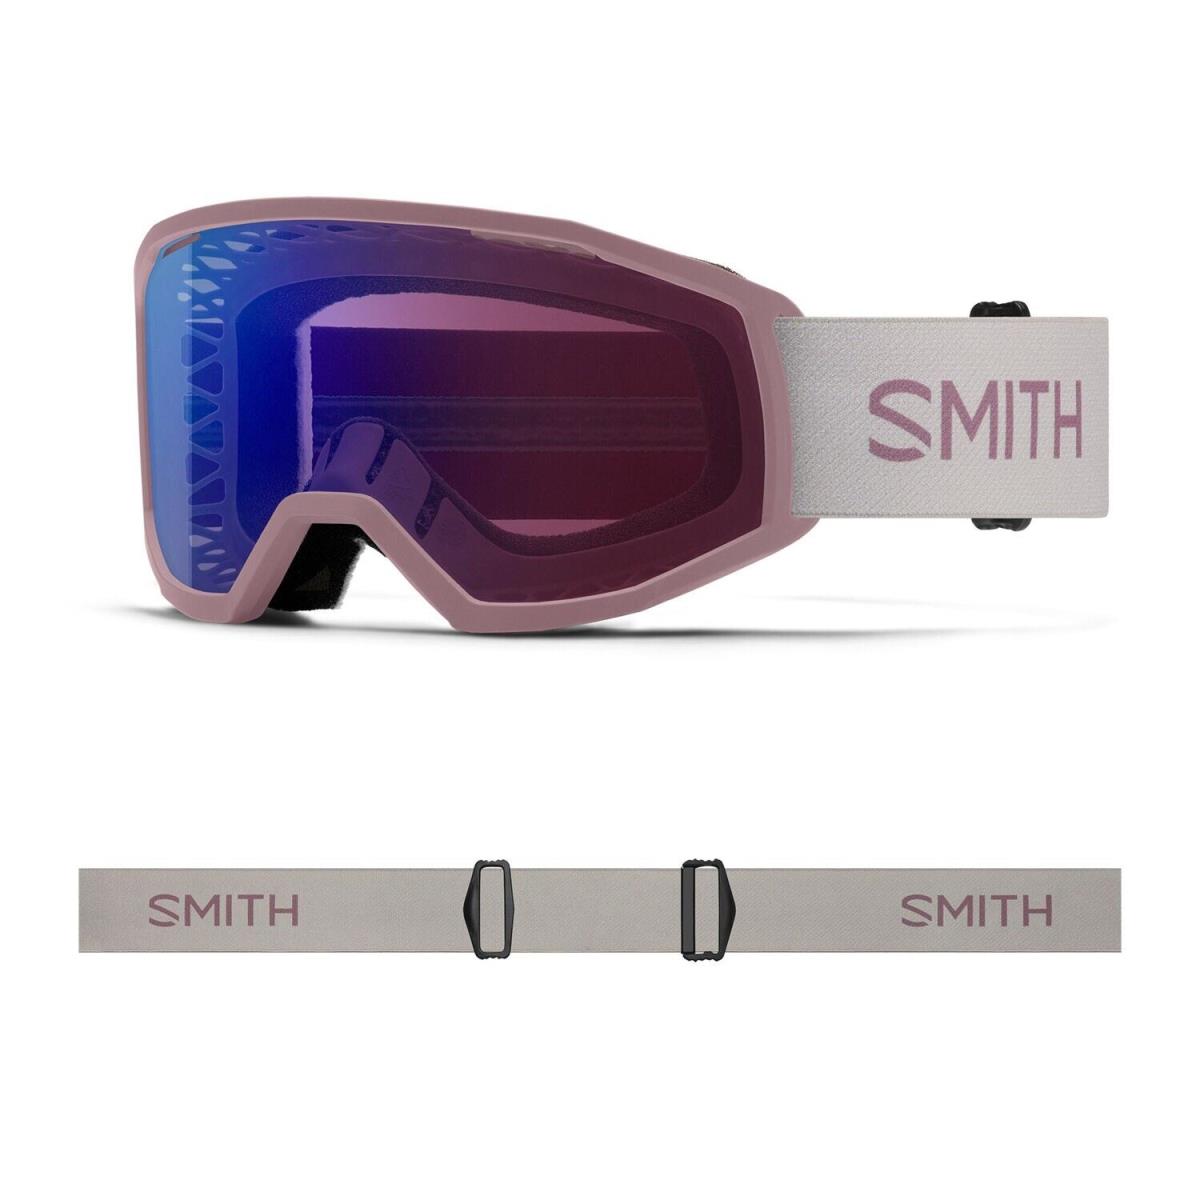 Smith Loam S Mtb / Bike Goggles Dusk / Bone Frame Contrast Rose Flash + Bonus